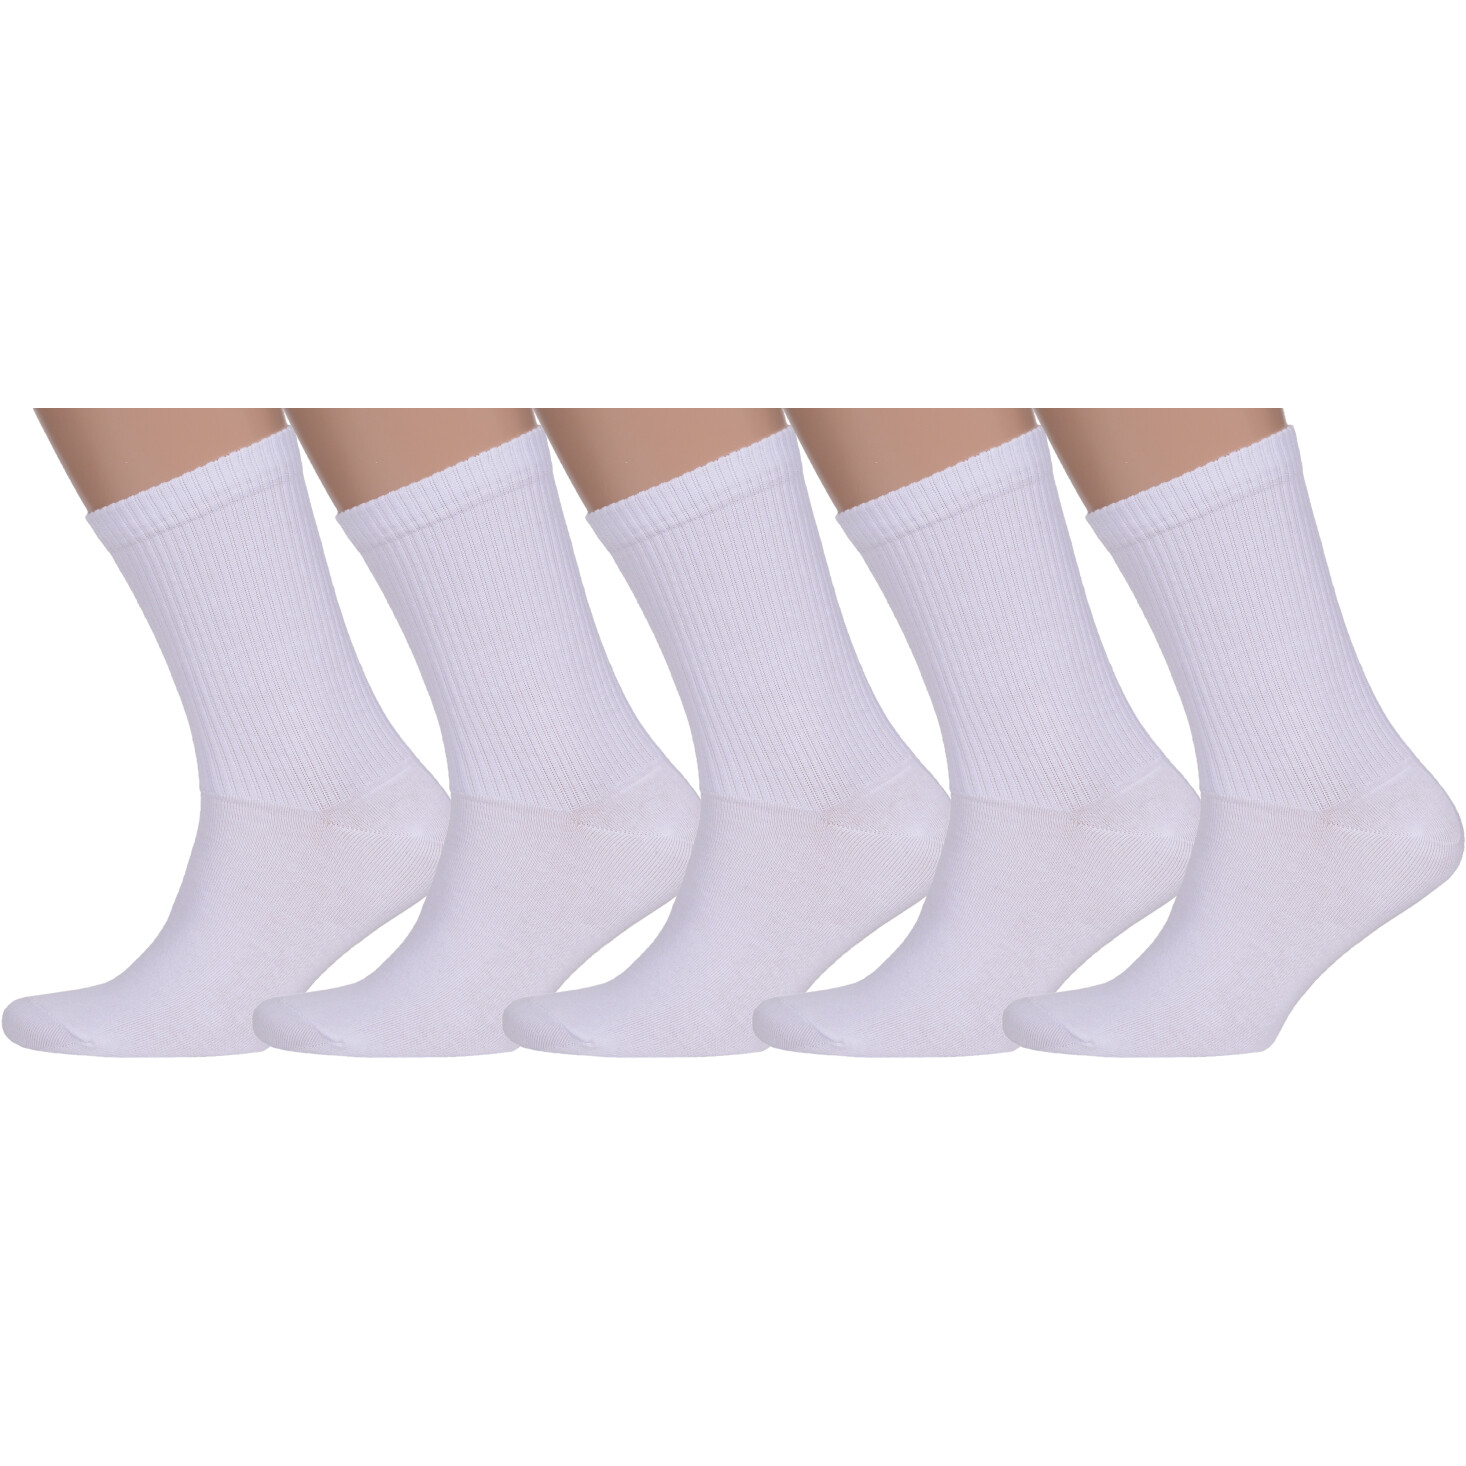 Комплект носков мужских VIRTUOSO 5-nm-50 белых 25 5 пар